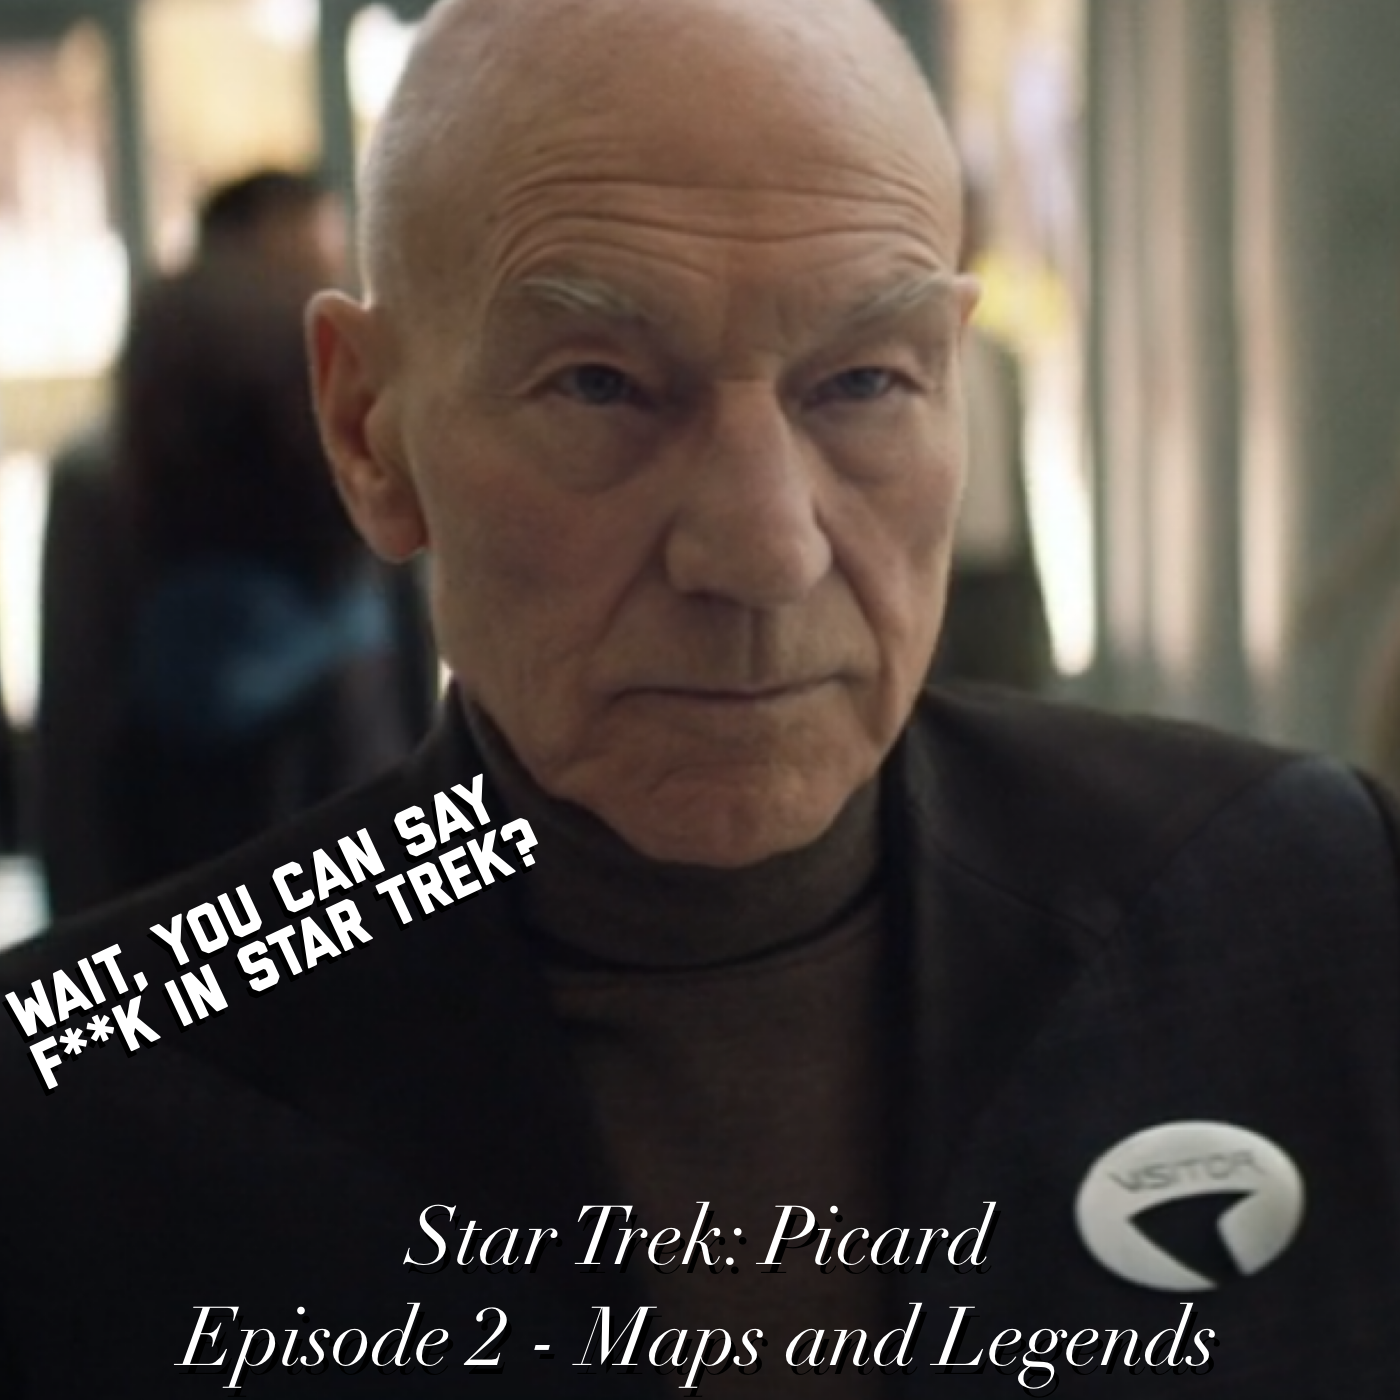 Star Trek: Picard Episode 2 - Maps and Legends- Recap